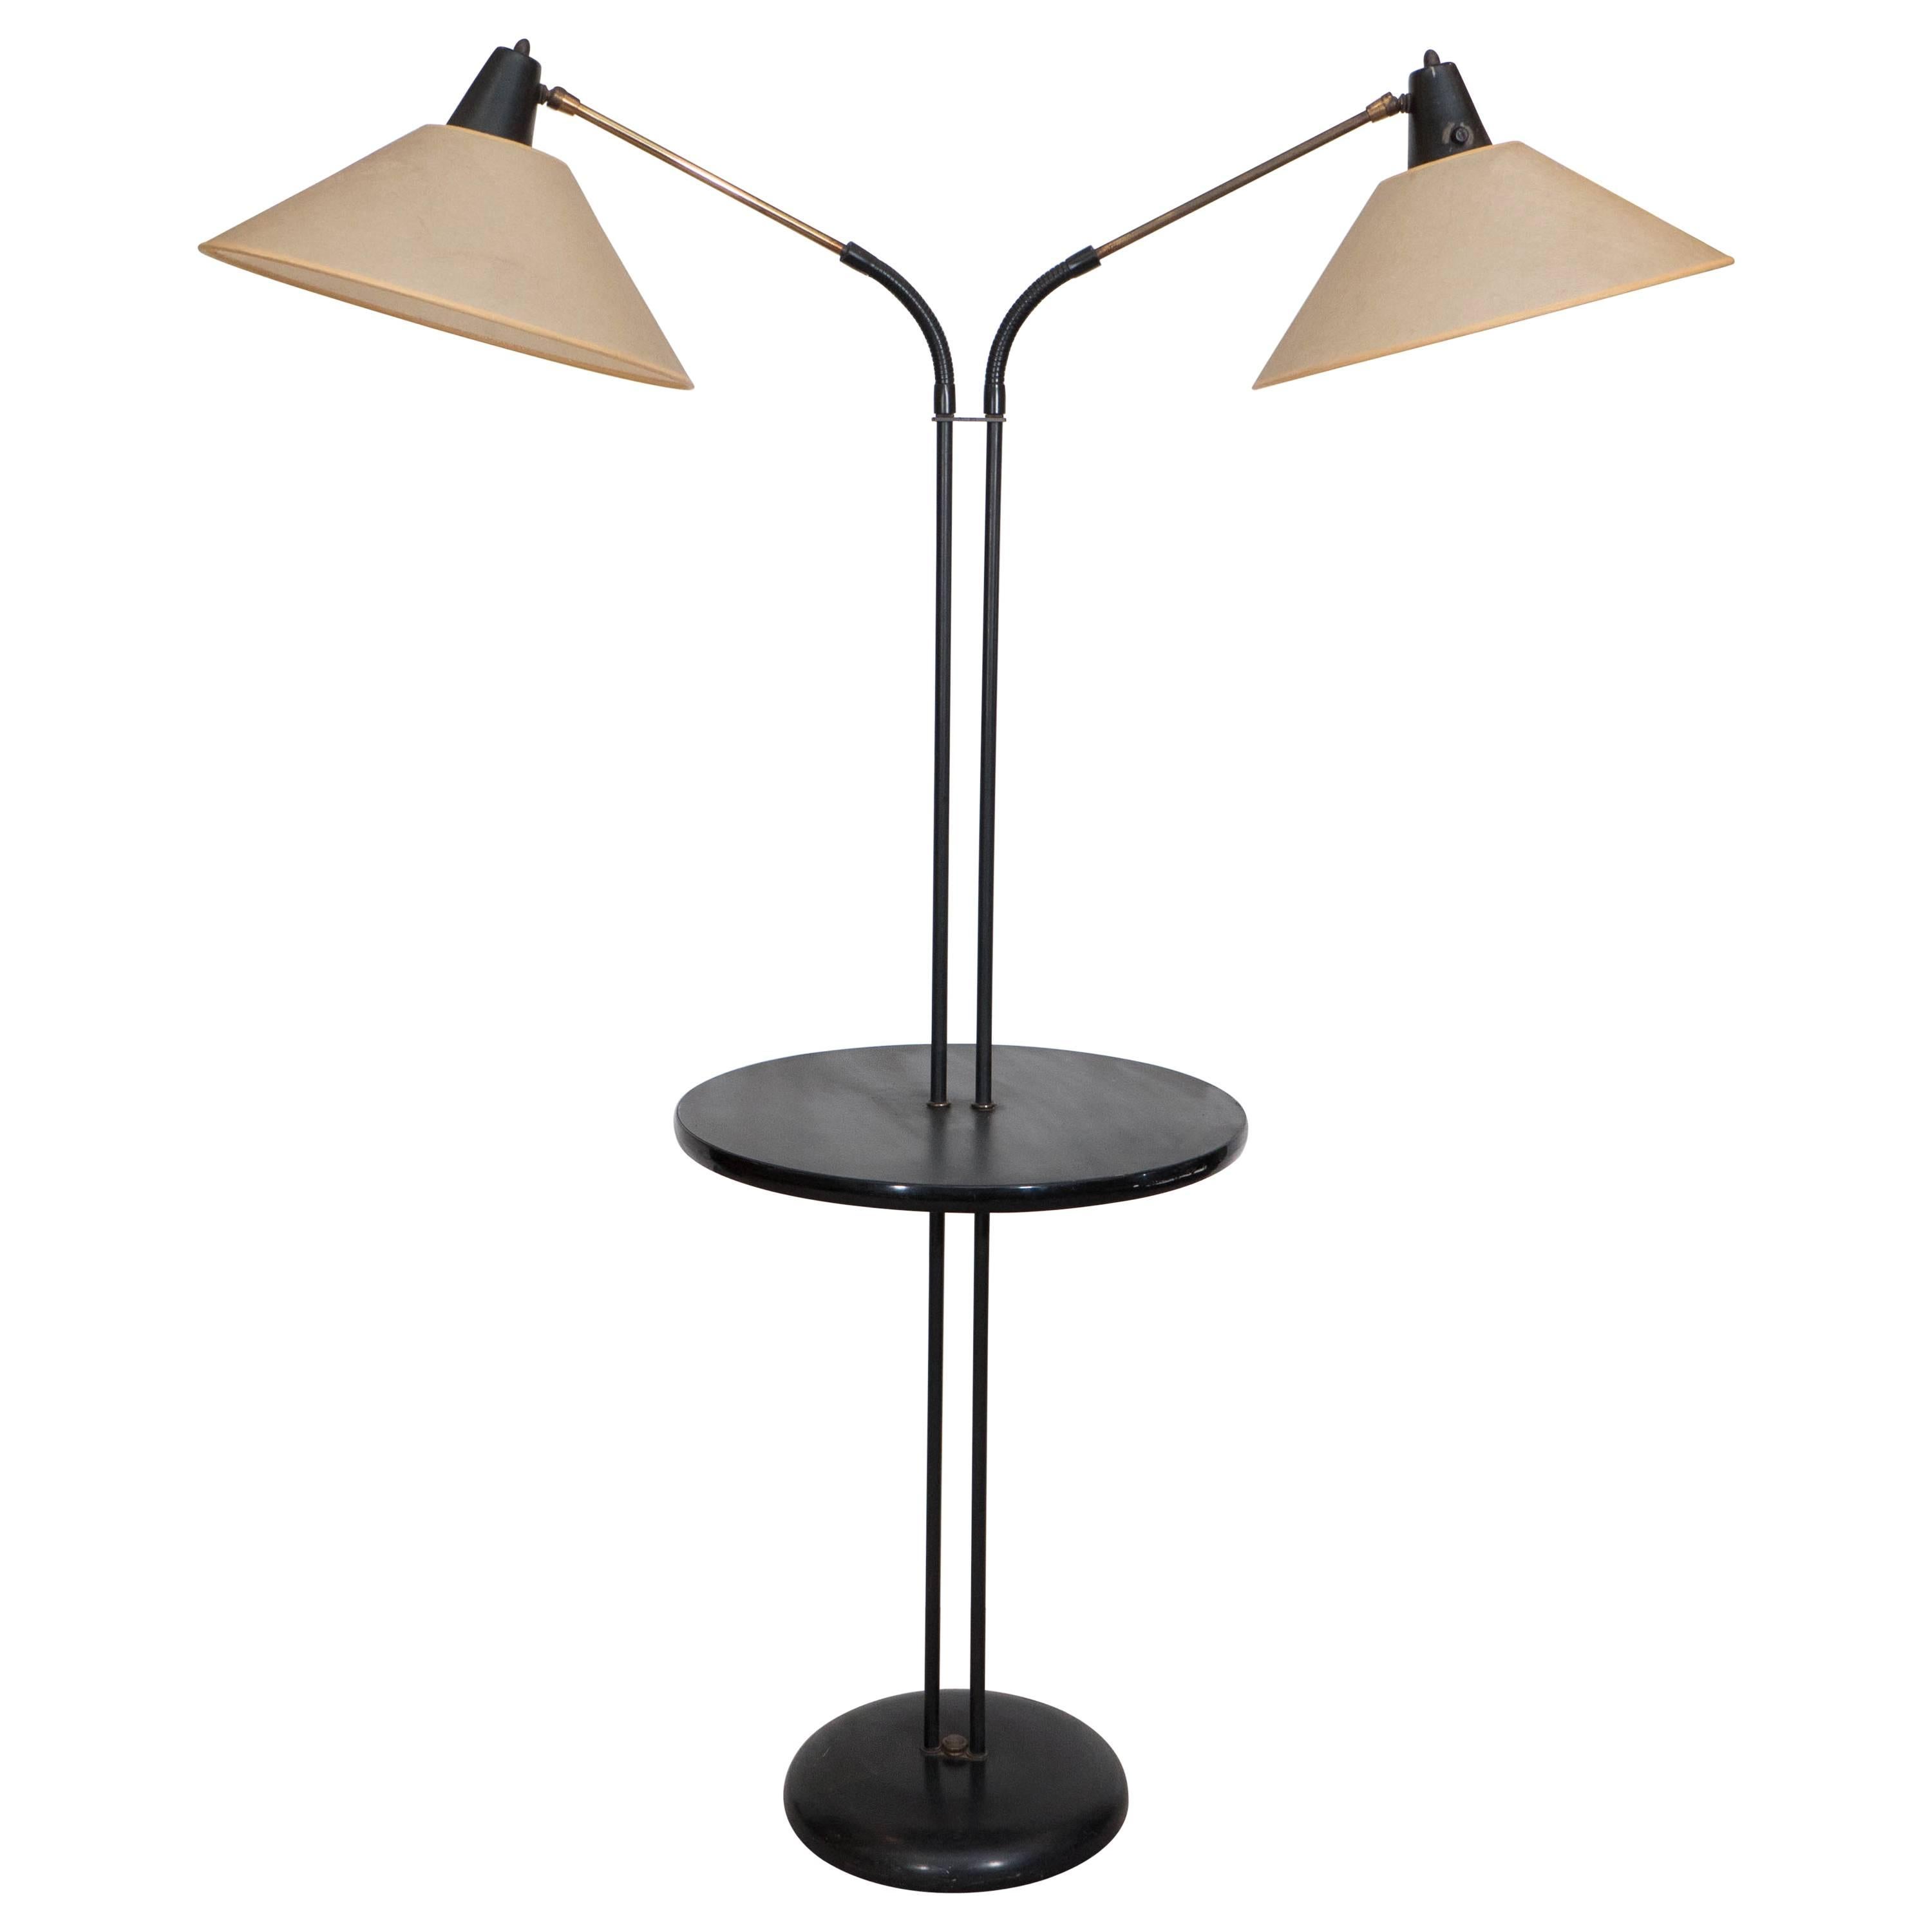 Midcentury Dual Light Gooseneck Floor Lamp with Table